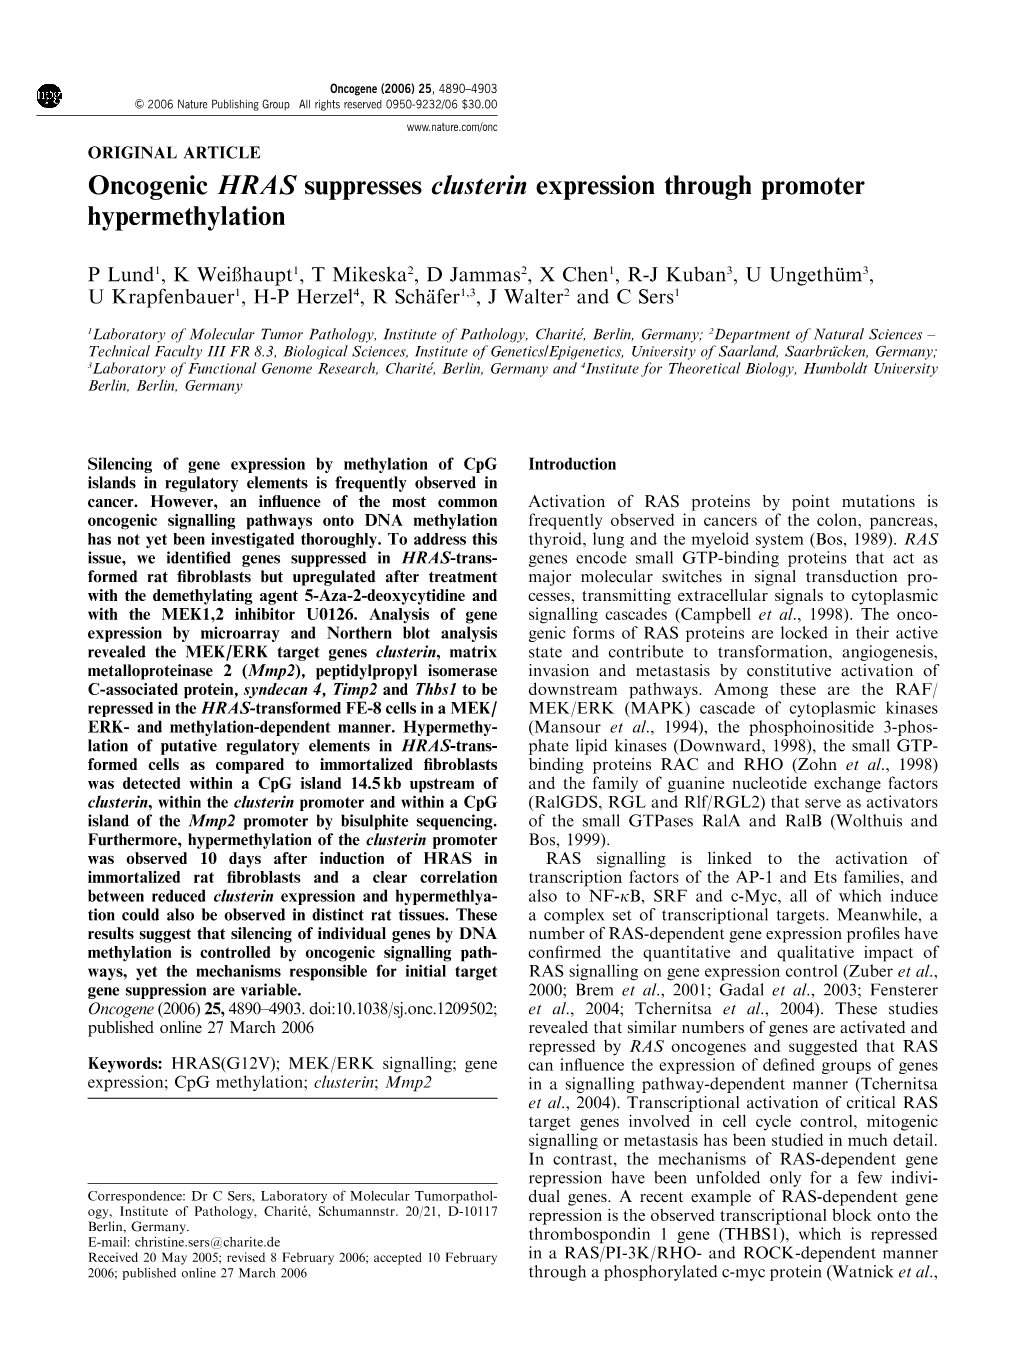 Oncogenic HRAS Suppresses Clusterin Expression Through Promoter Hypermethylation